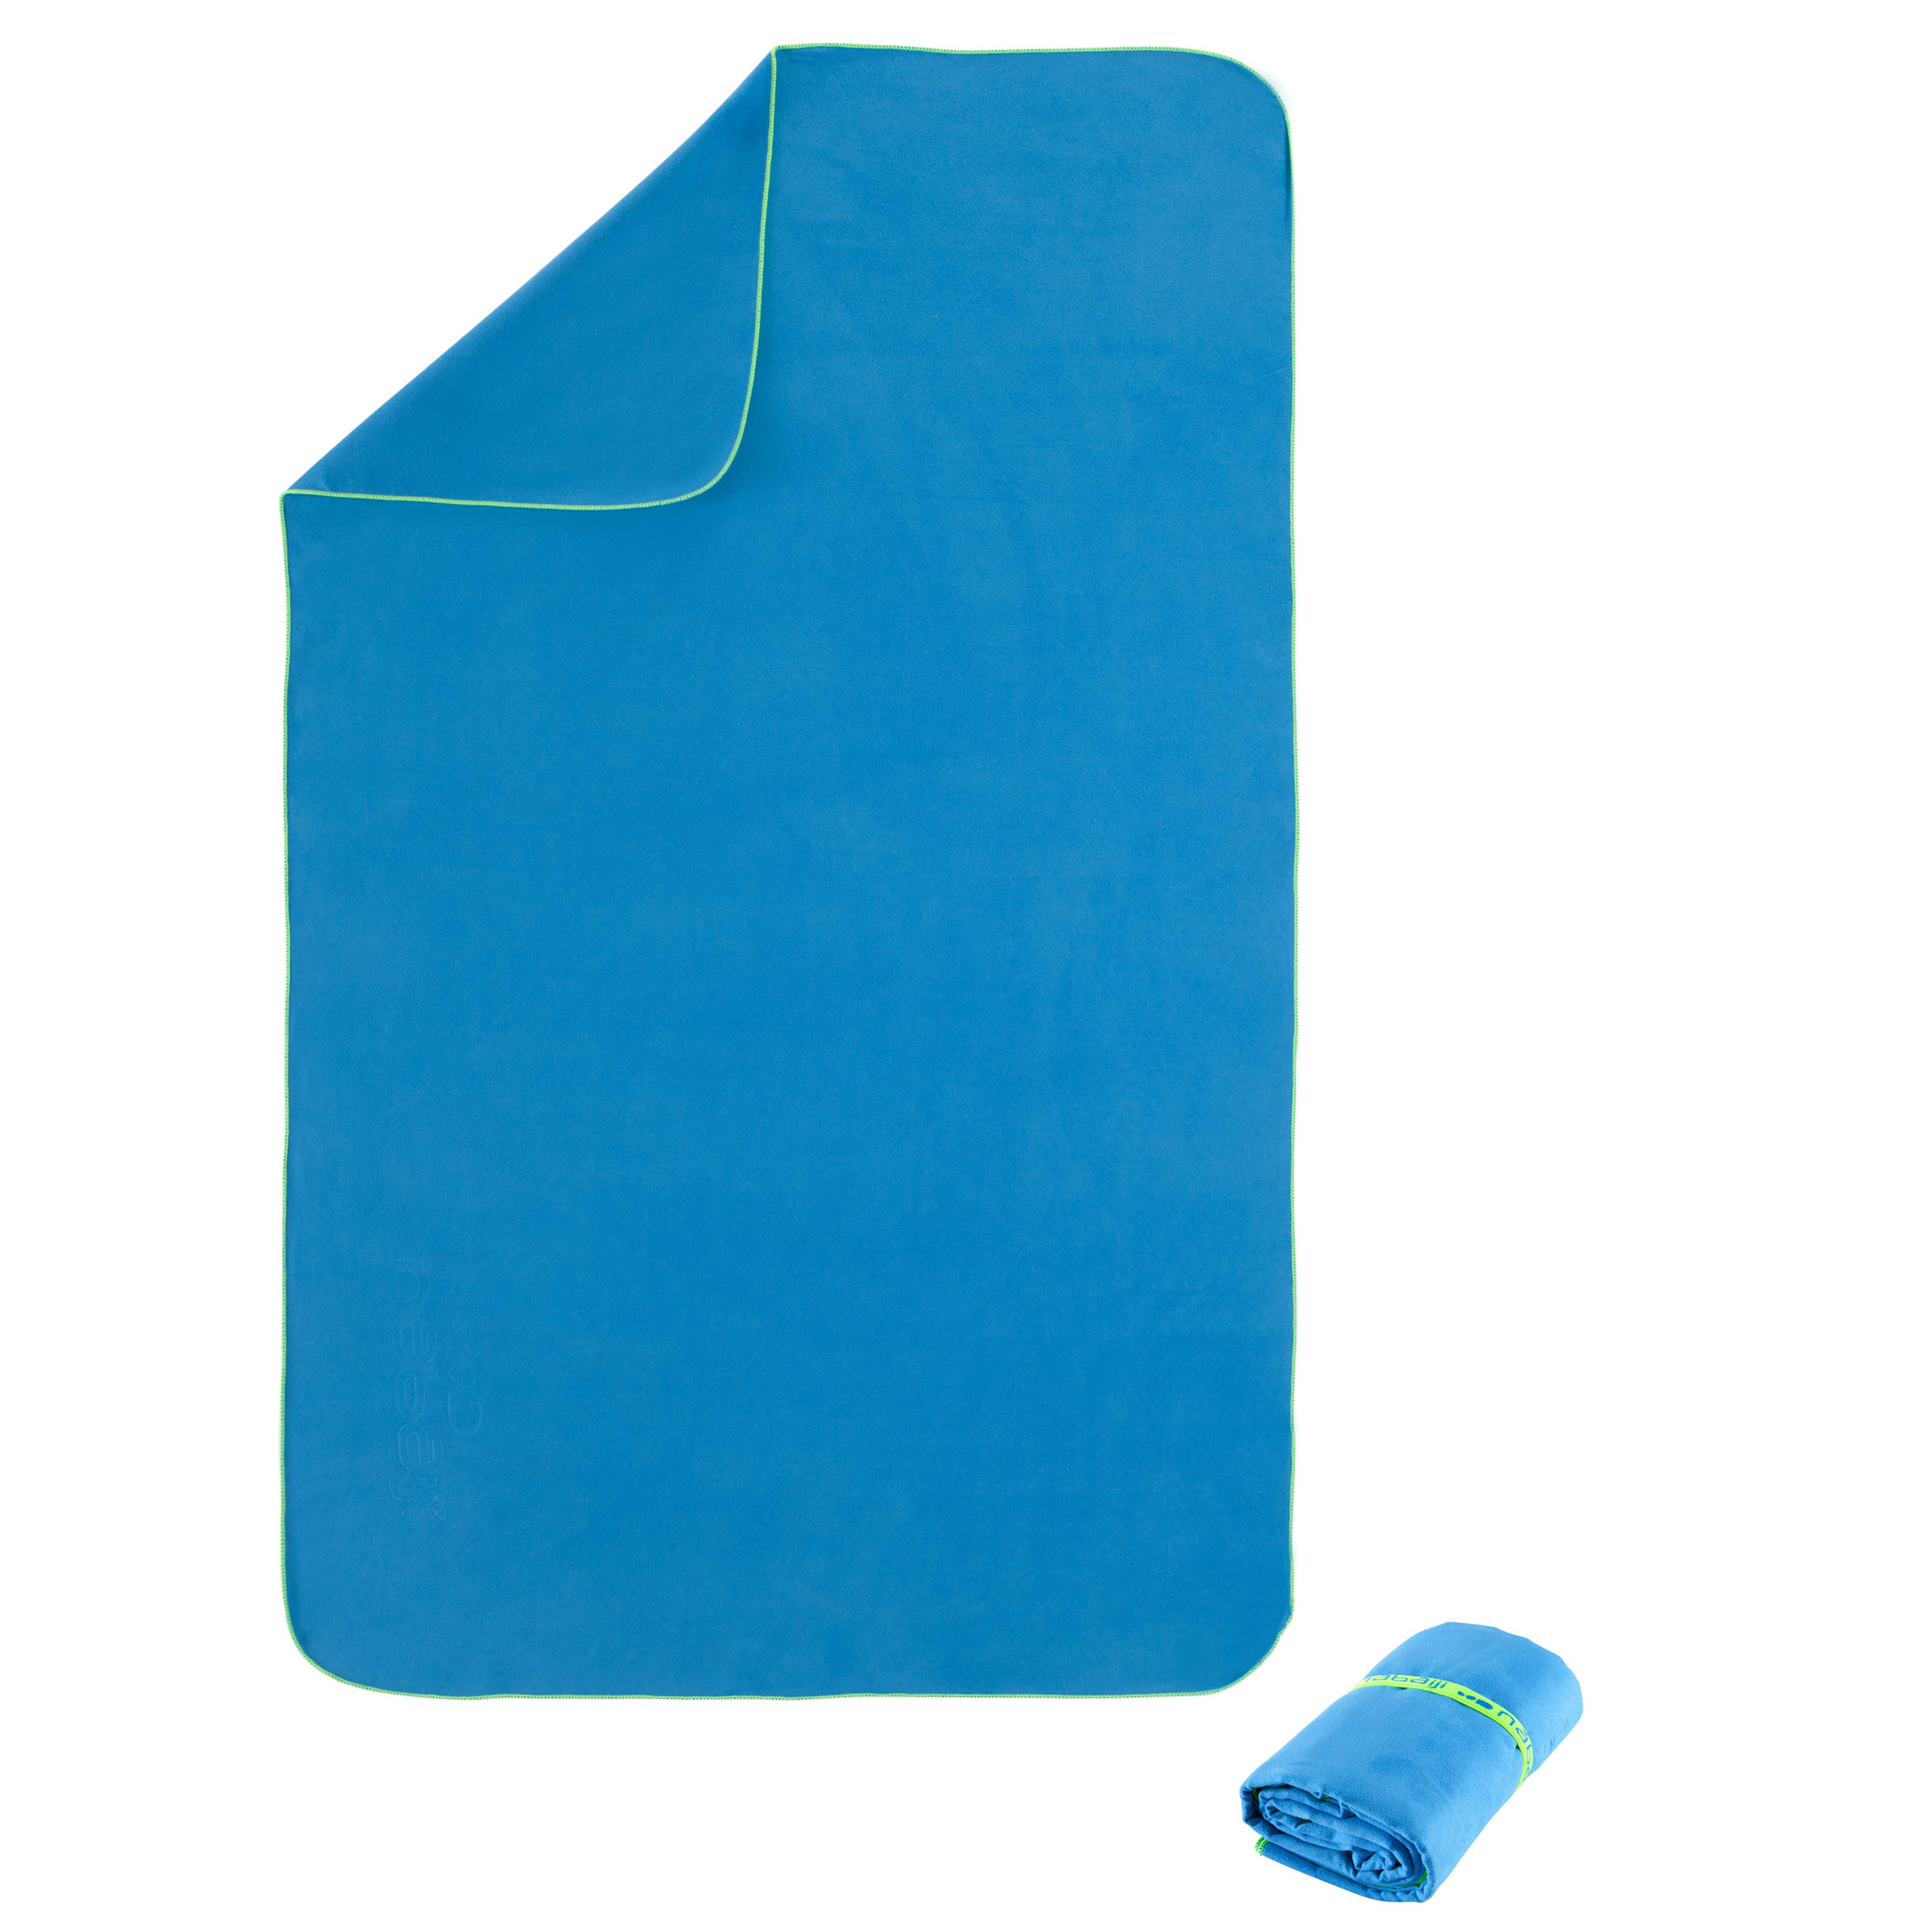 Microfibre towel ultra compact size XL 